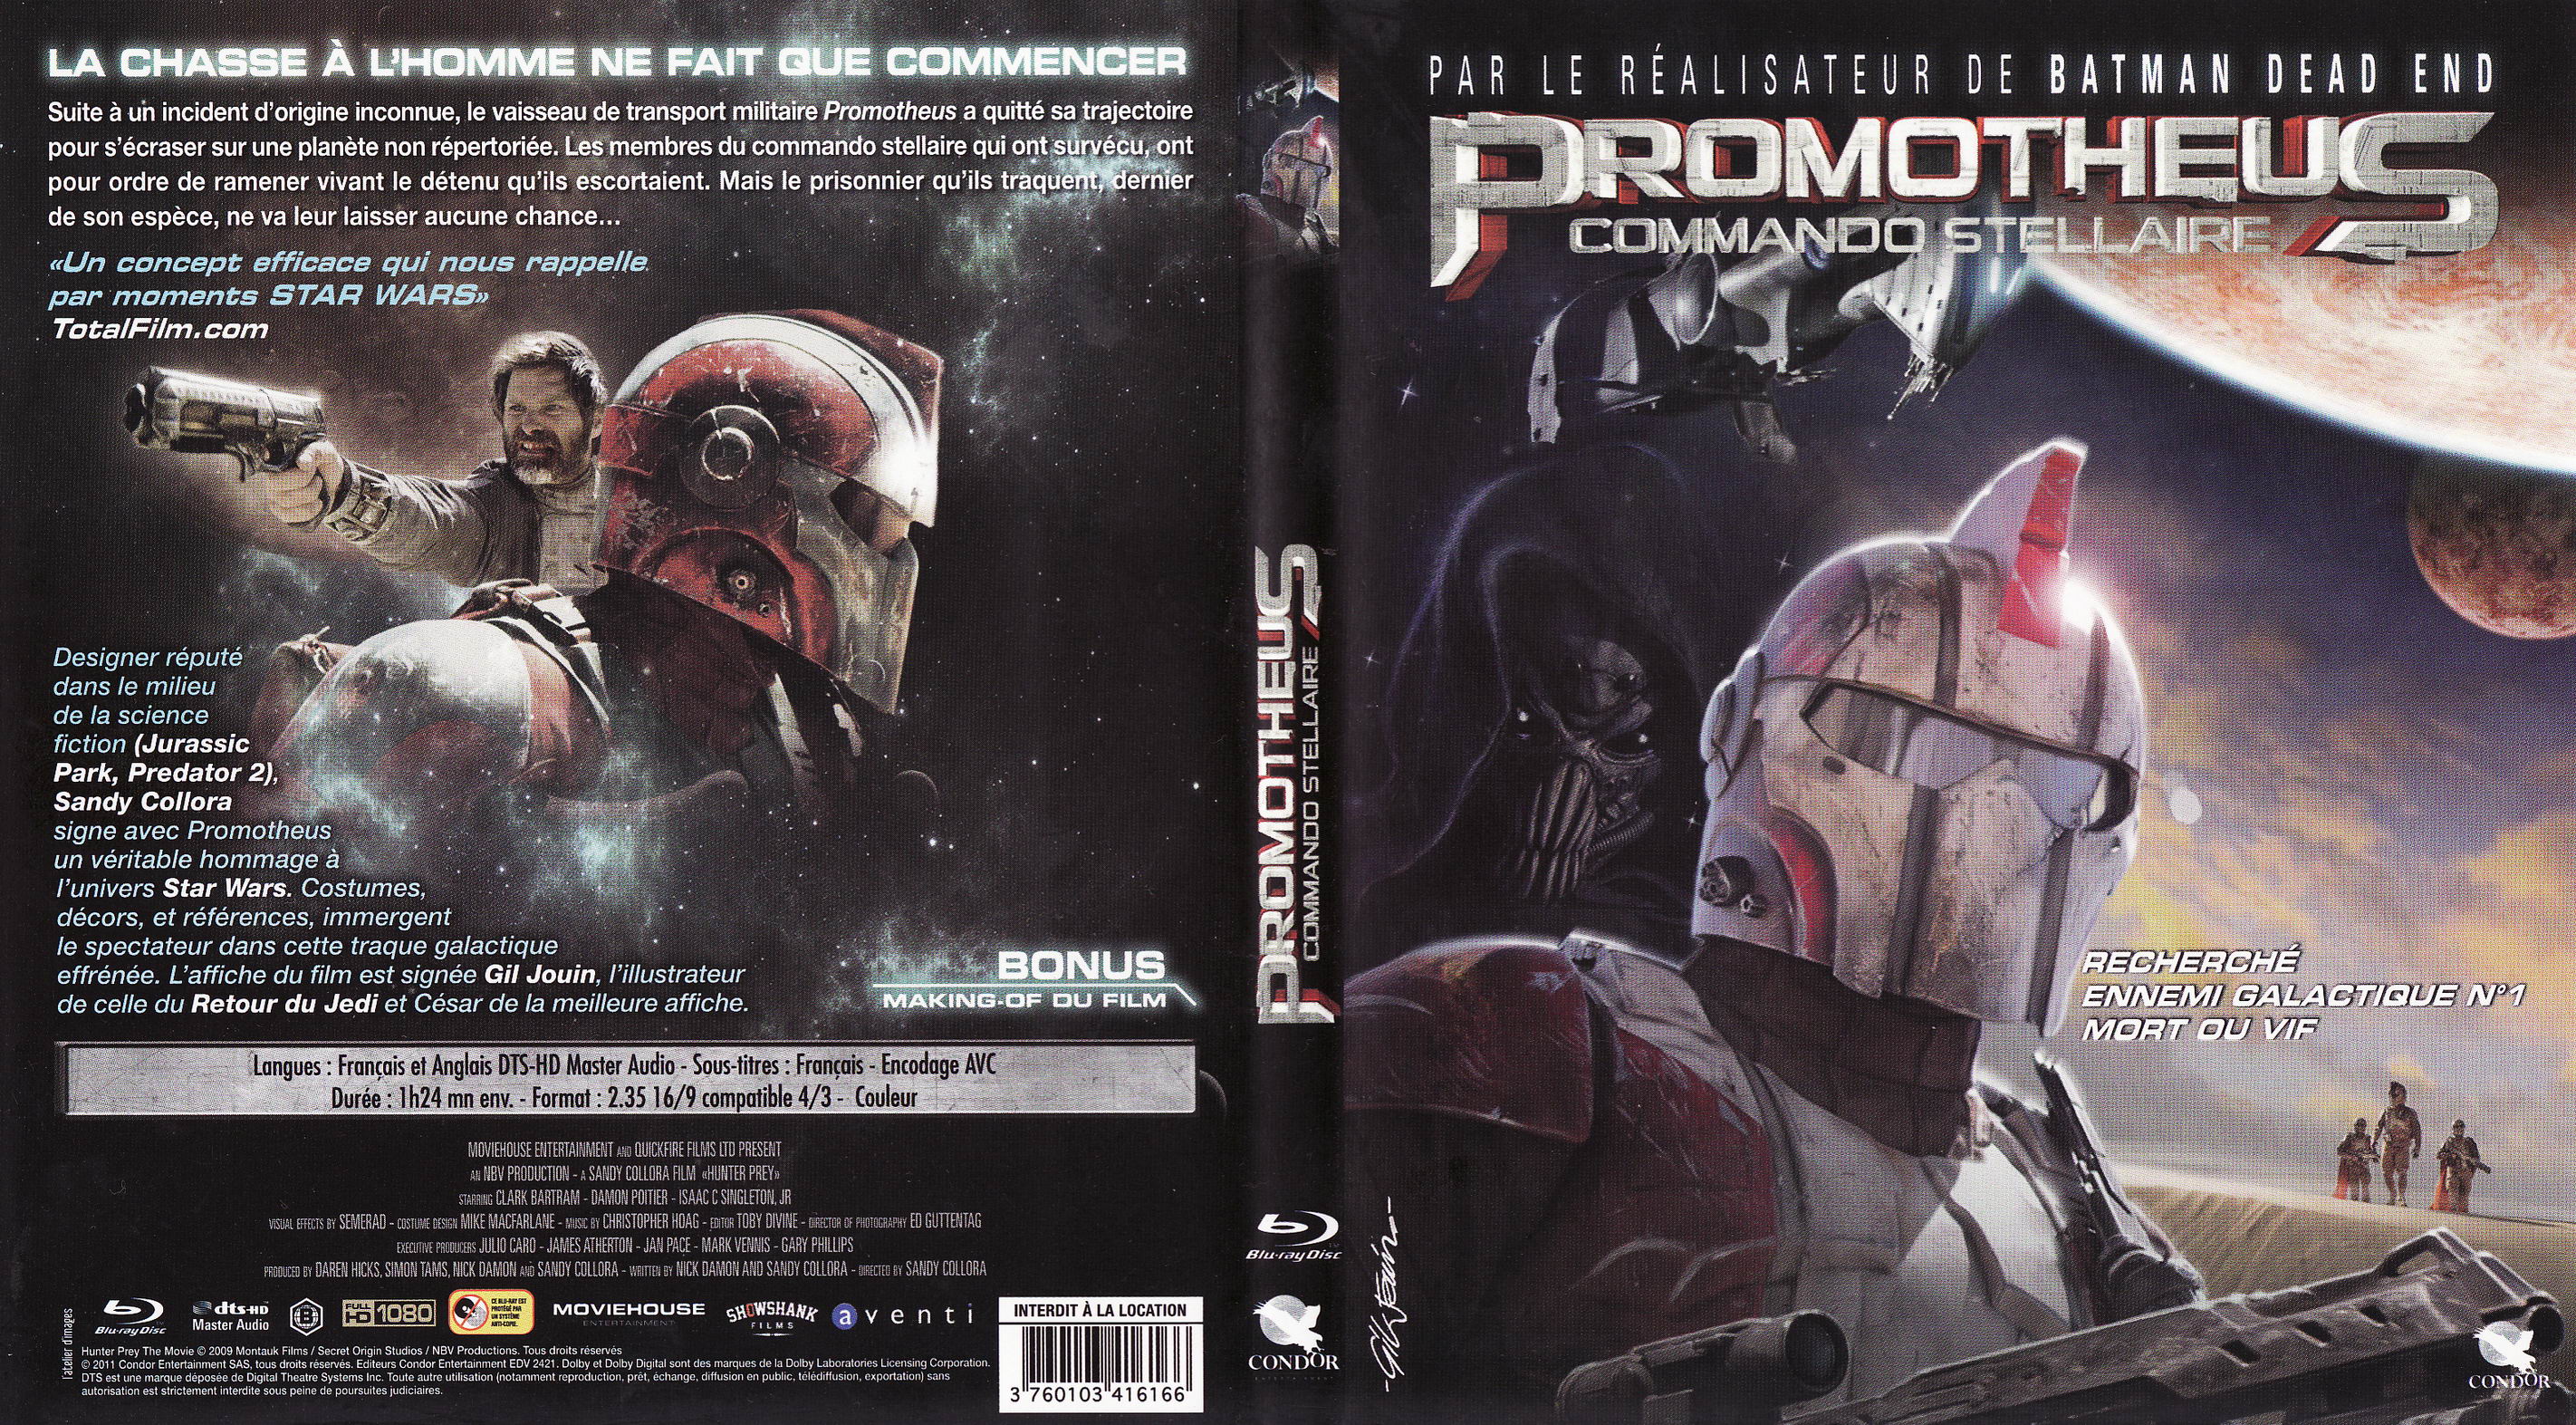 Jaquette DVD Promotheus commando stellaire (BLU-RAY)